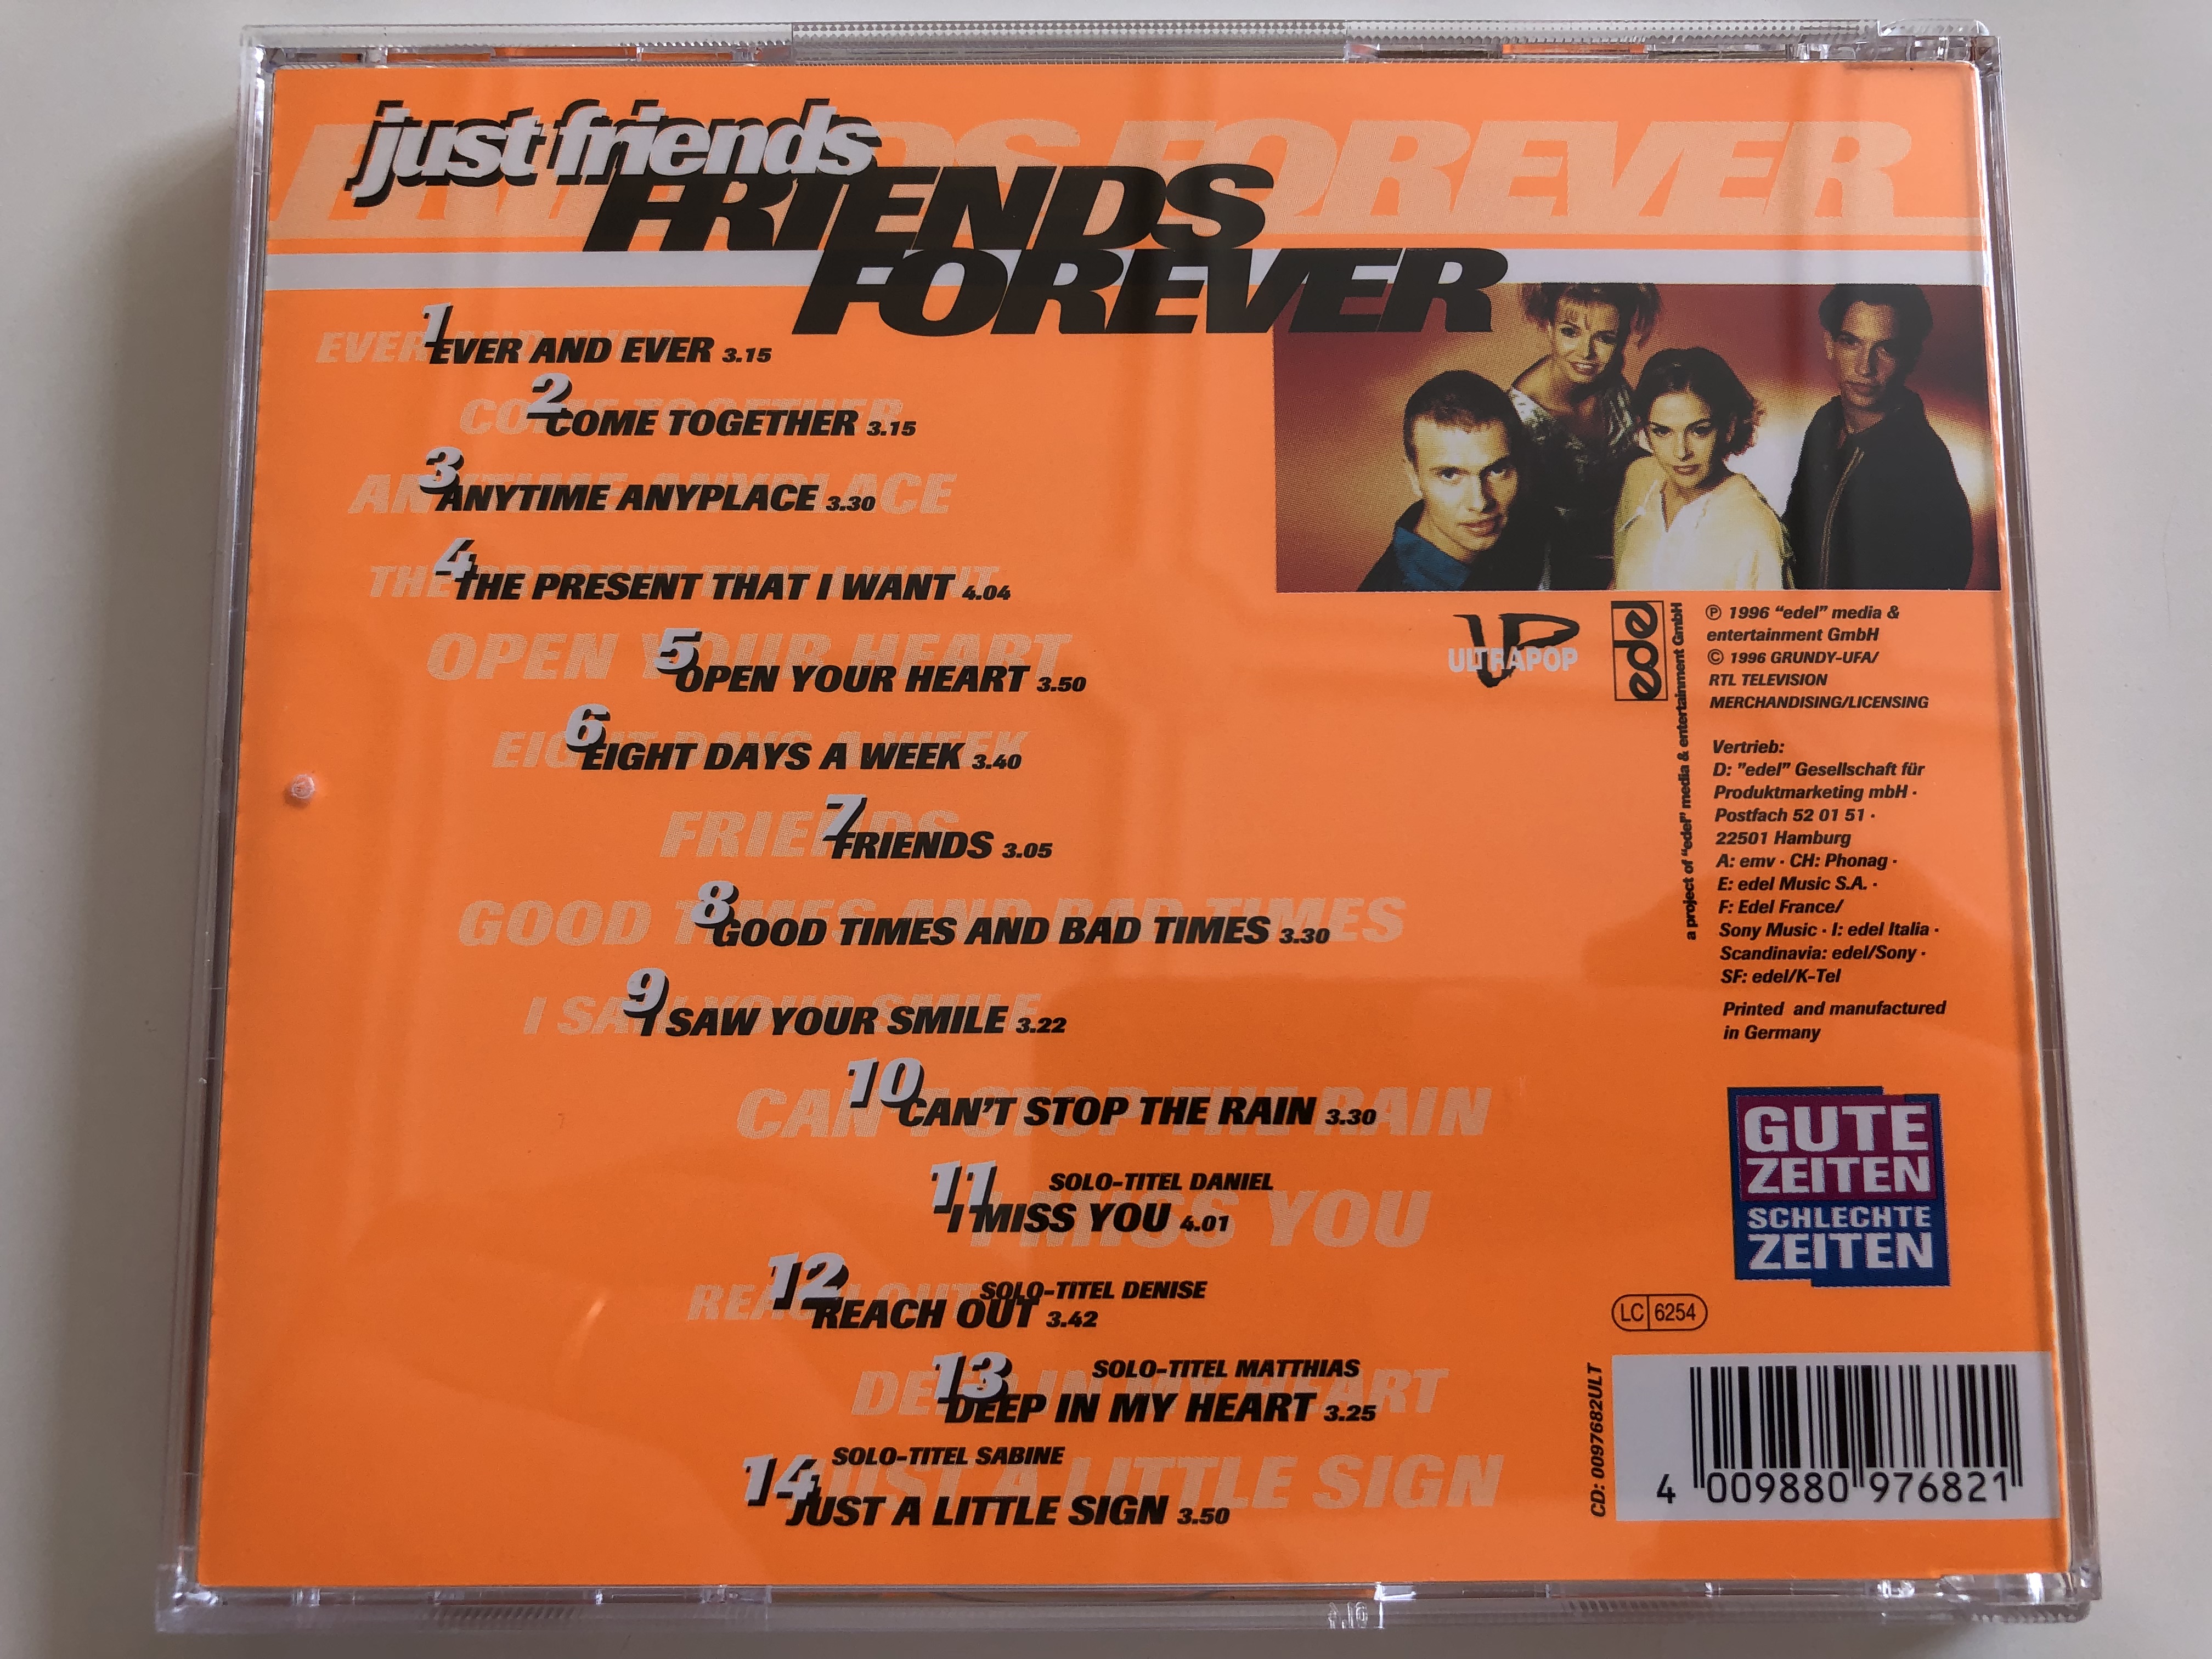 just-friends-friends-forever-audio-cd-1996-ultrapop-cd-0097682ult-8-.jpg